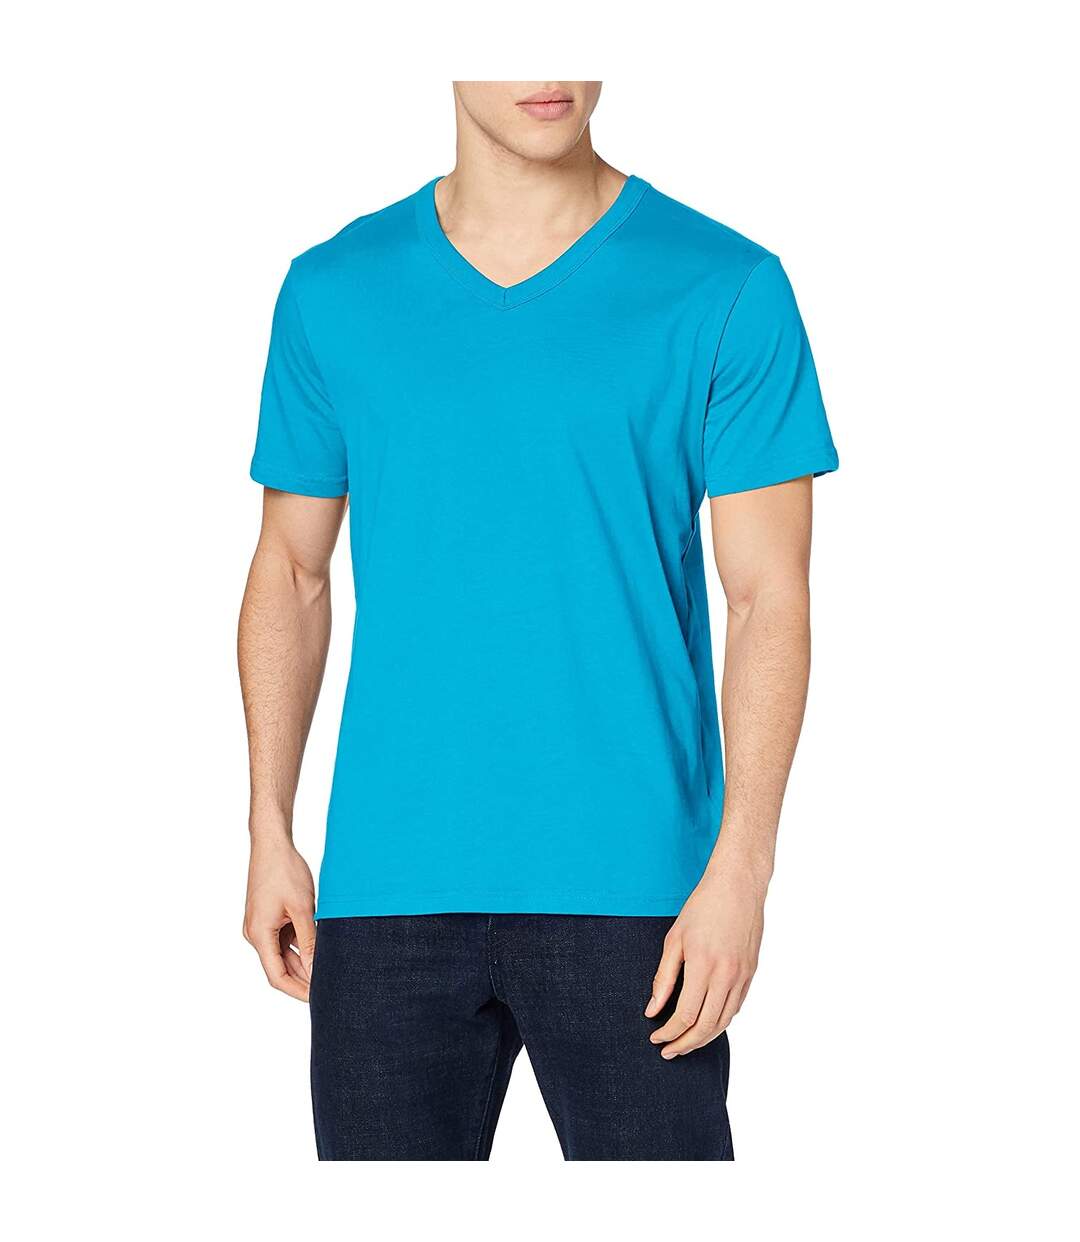 Stedman - T-shirt col V BEN - Homme (Bleu clair) - UTAB356